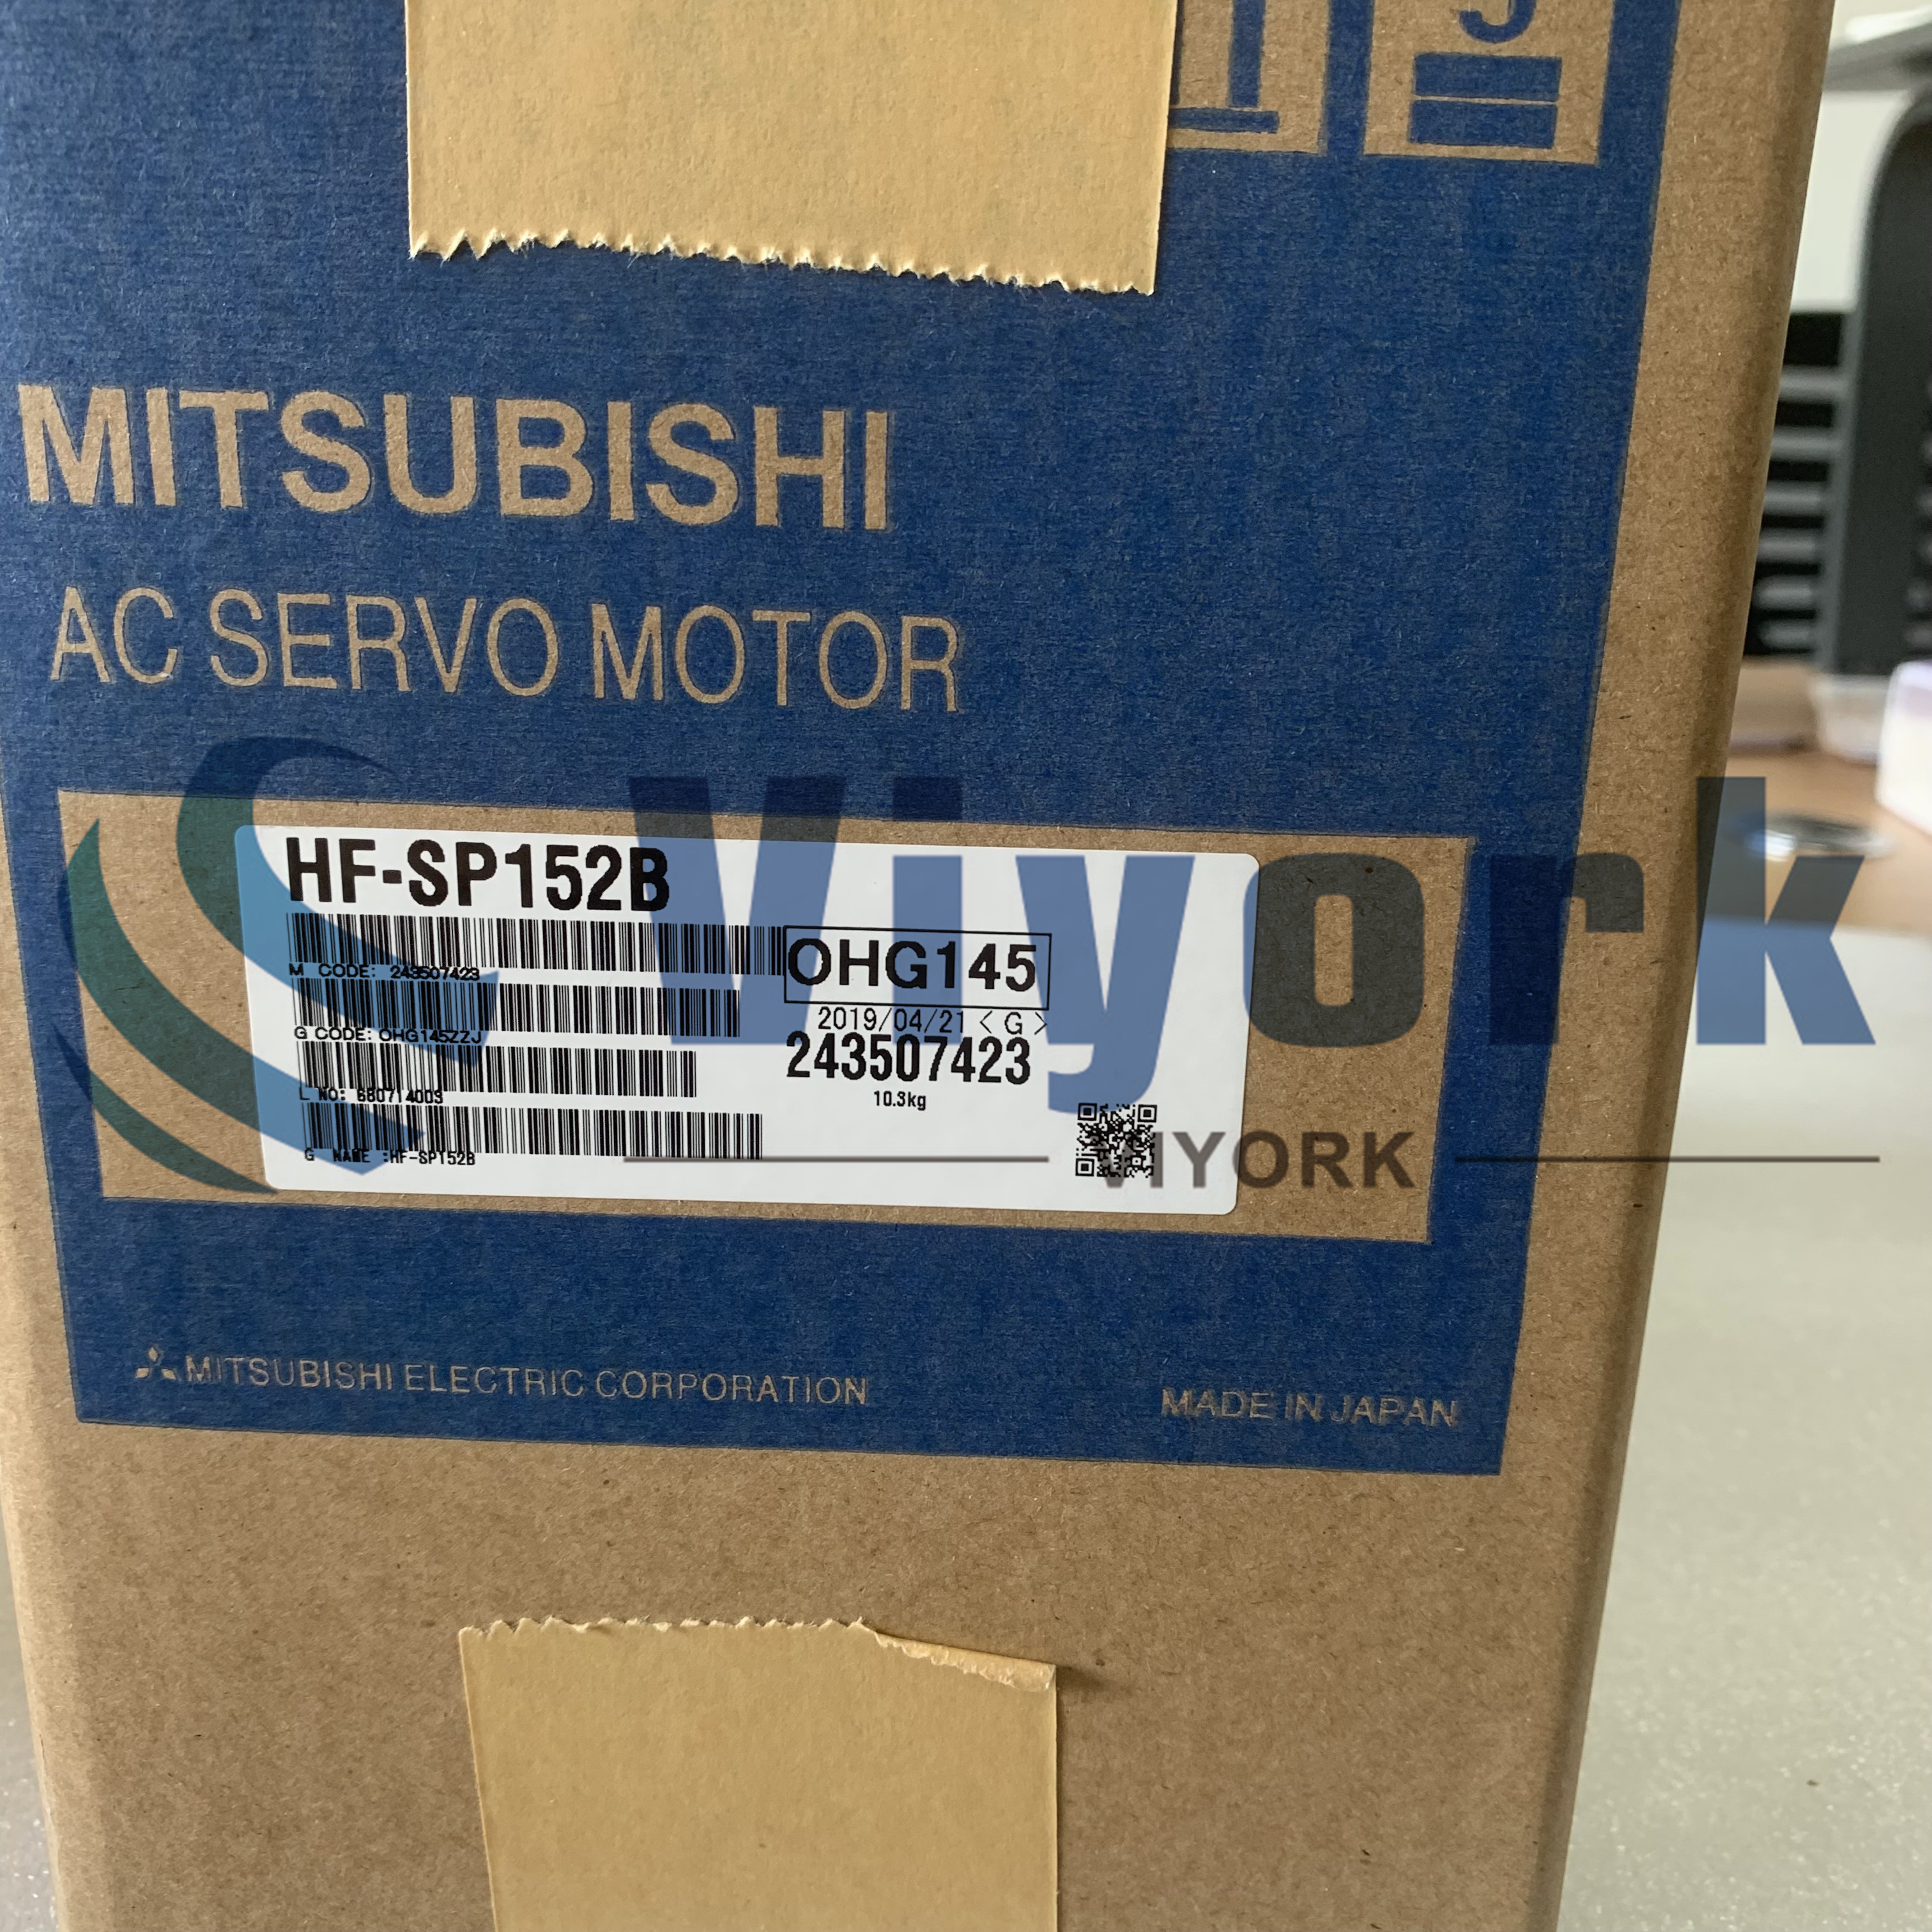 Mitsubishi HF-SP152B AC SERVO MOTOR 1.5KW 2000RPM 200-230VAC W/EM BRAKENEW